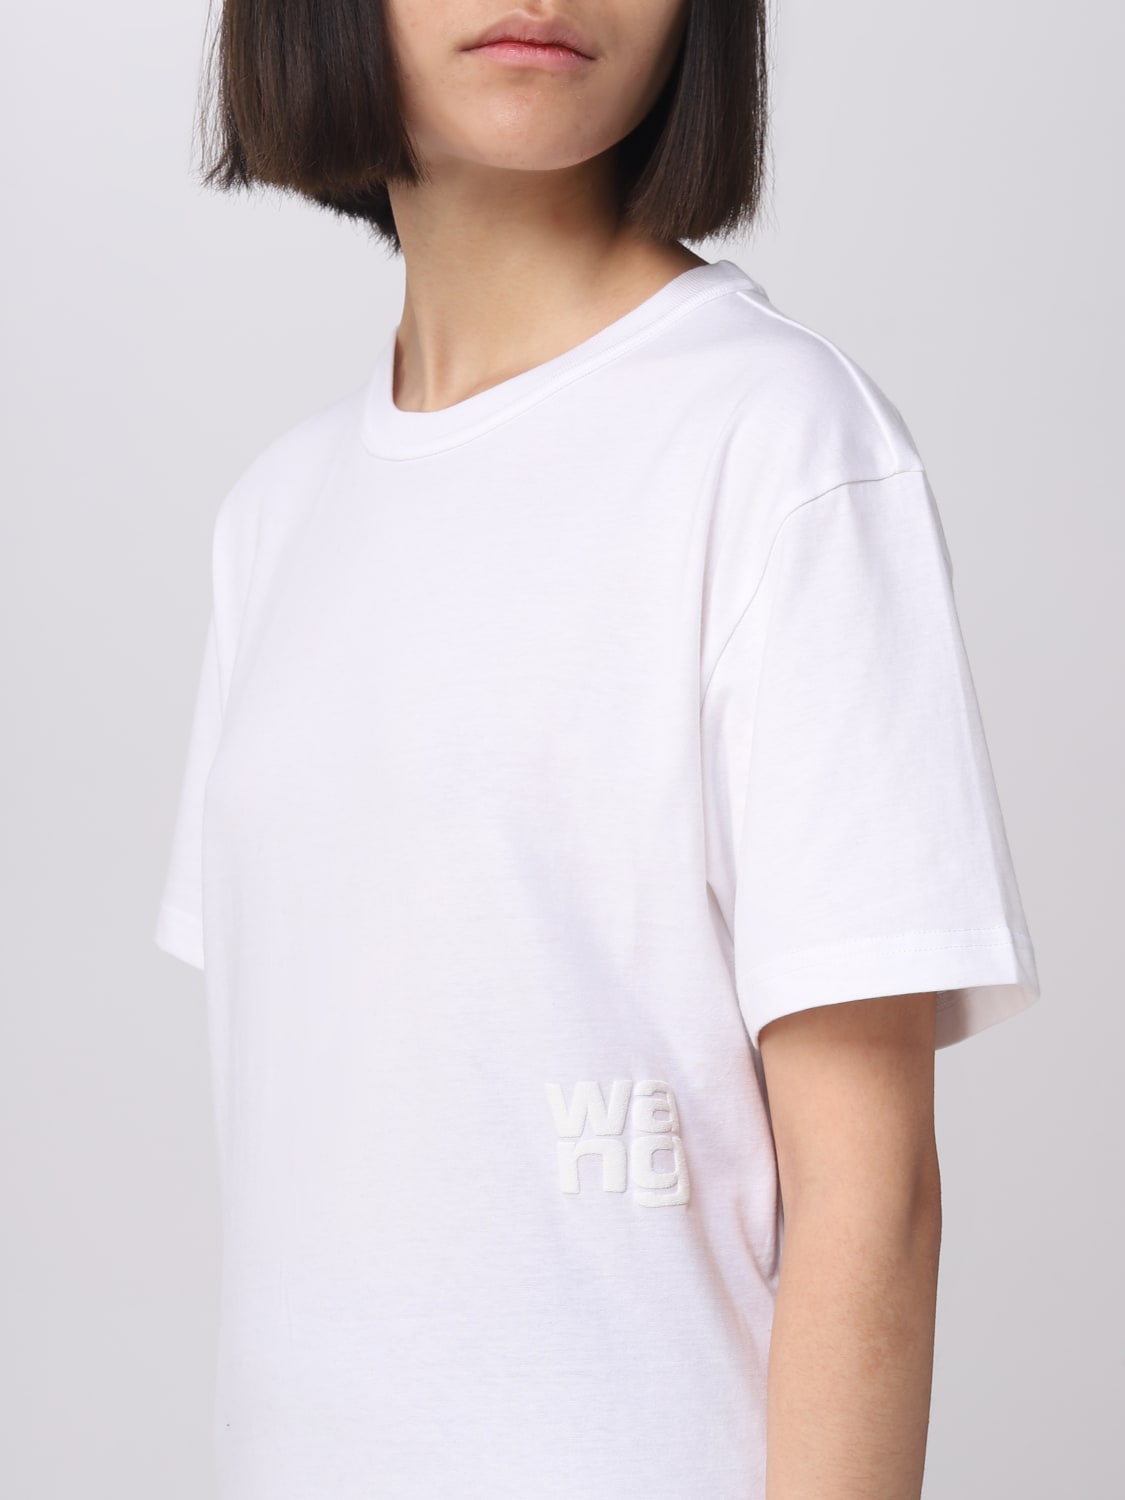 Alexander Wang Outlet: T-shirt woman - White | Alexander Wang t-shirt  4CC3221357 online at | T-Shirts